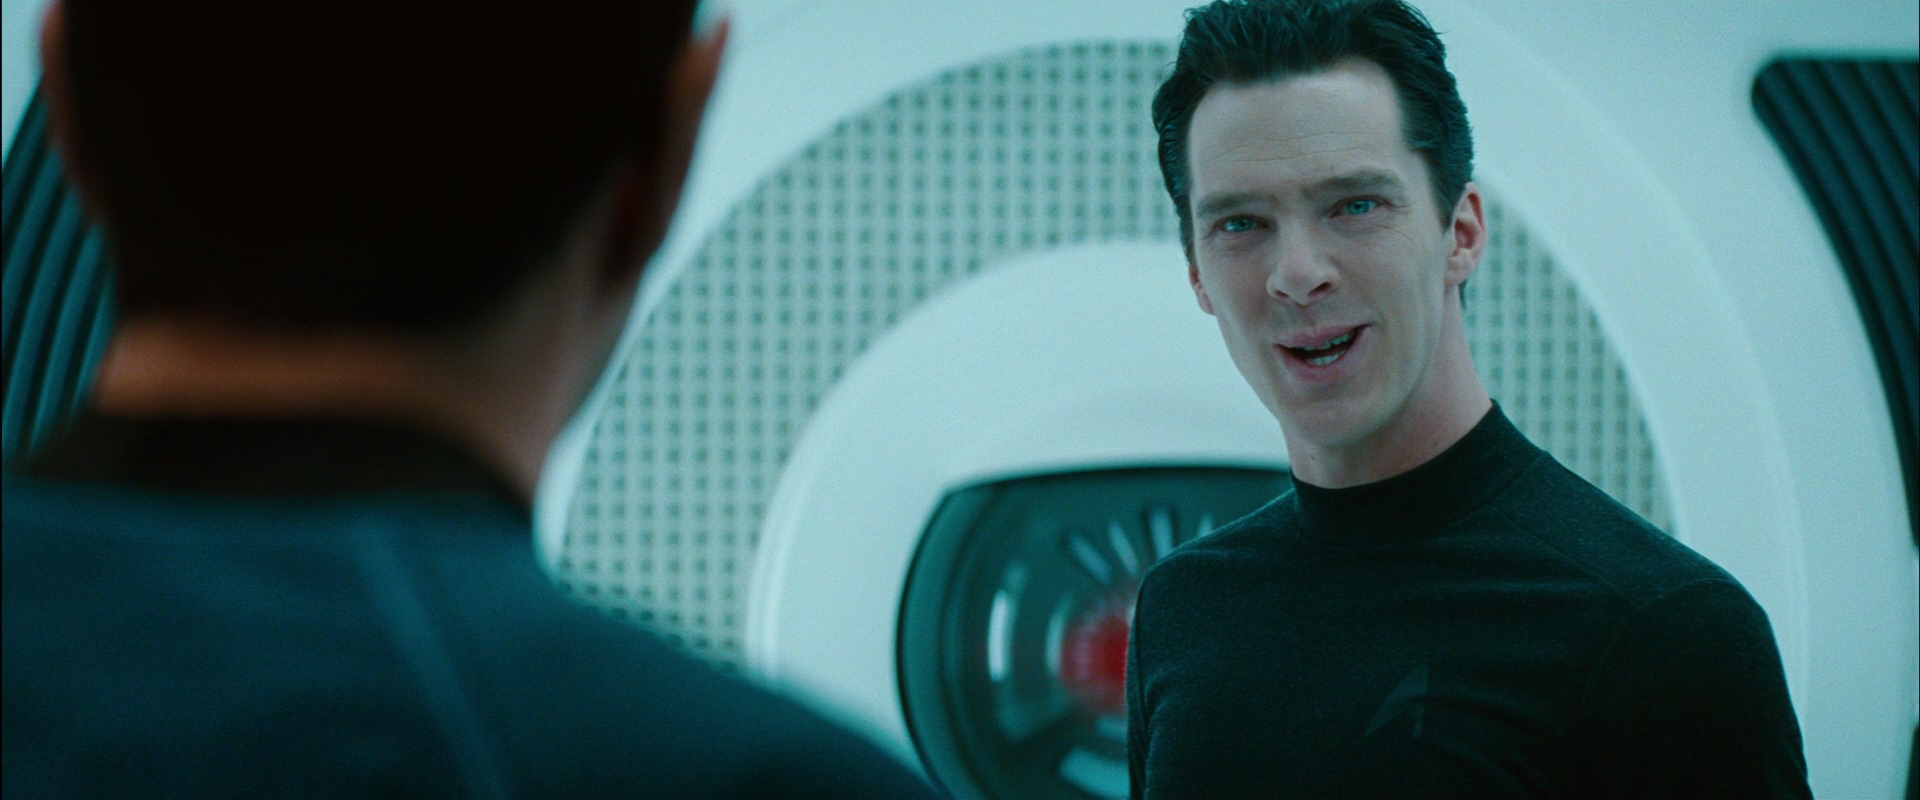 Benedict Cumberbatch as Khan in Star Trek Into Darkness (2013). 